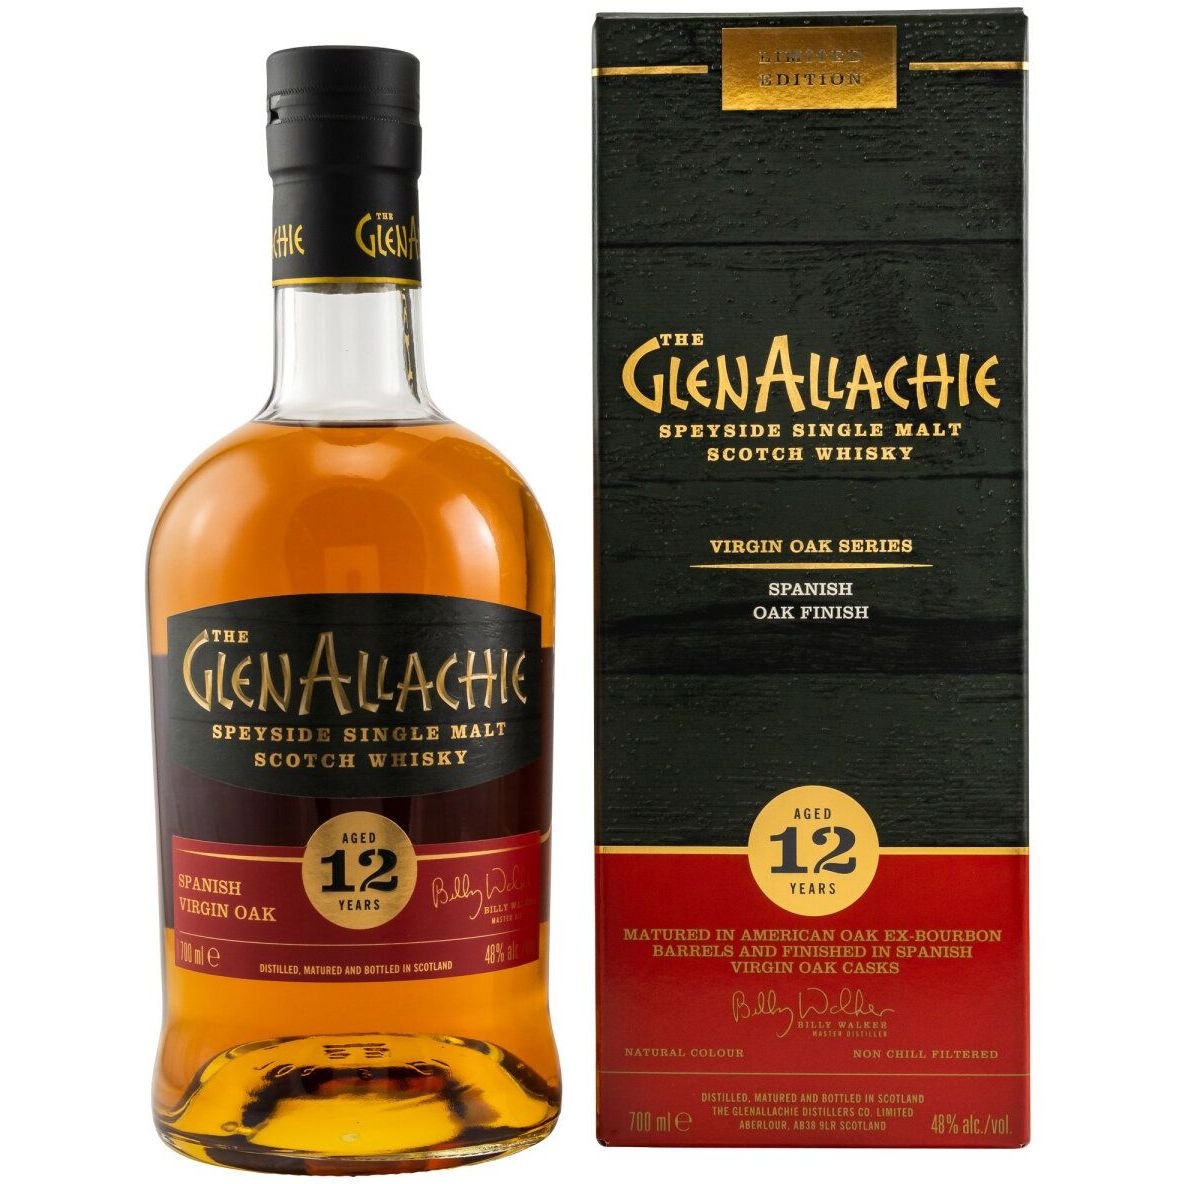 Виски Glenallachie 12 yo Spanish Virgin Oak Single Malt Scotch Whisky, 48%, в подарочной упаковке, 0,7 л - фото 1